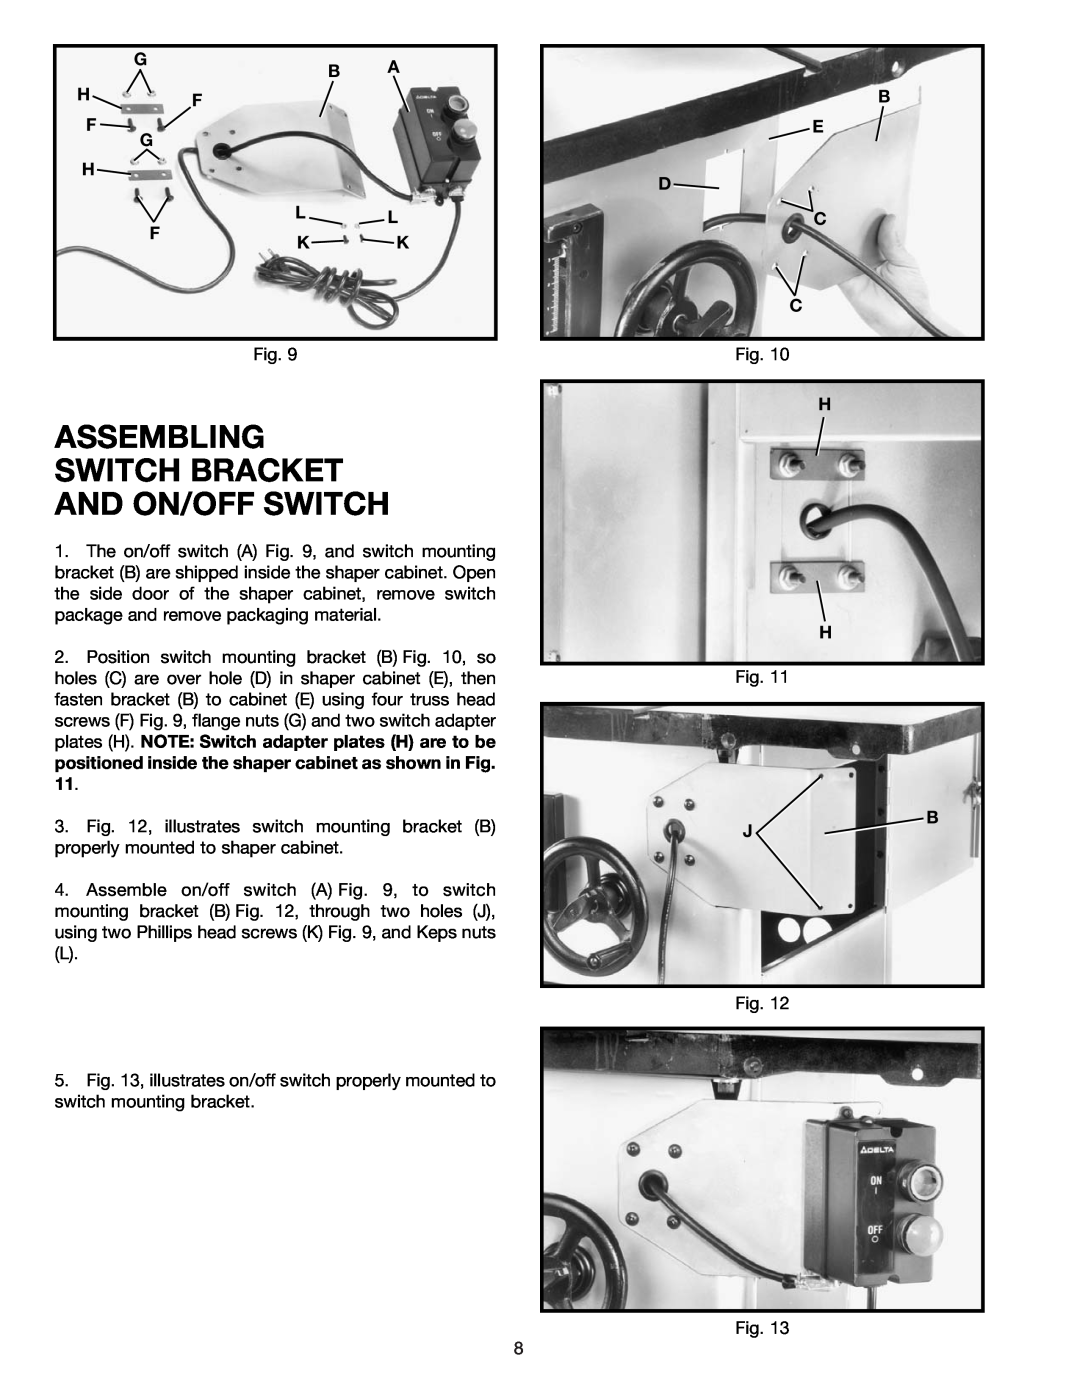 Delta 43-424 instruction manual Assembling Switch Bracket And On/Off Switch, Gb A H F F G H L L Fk K, B E D C C 